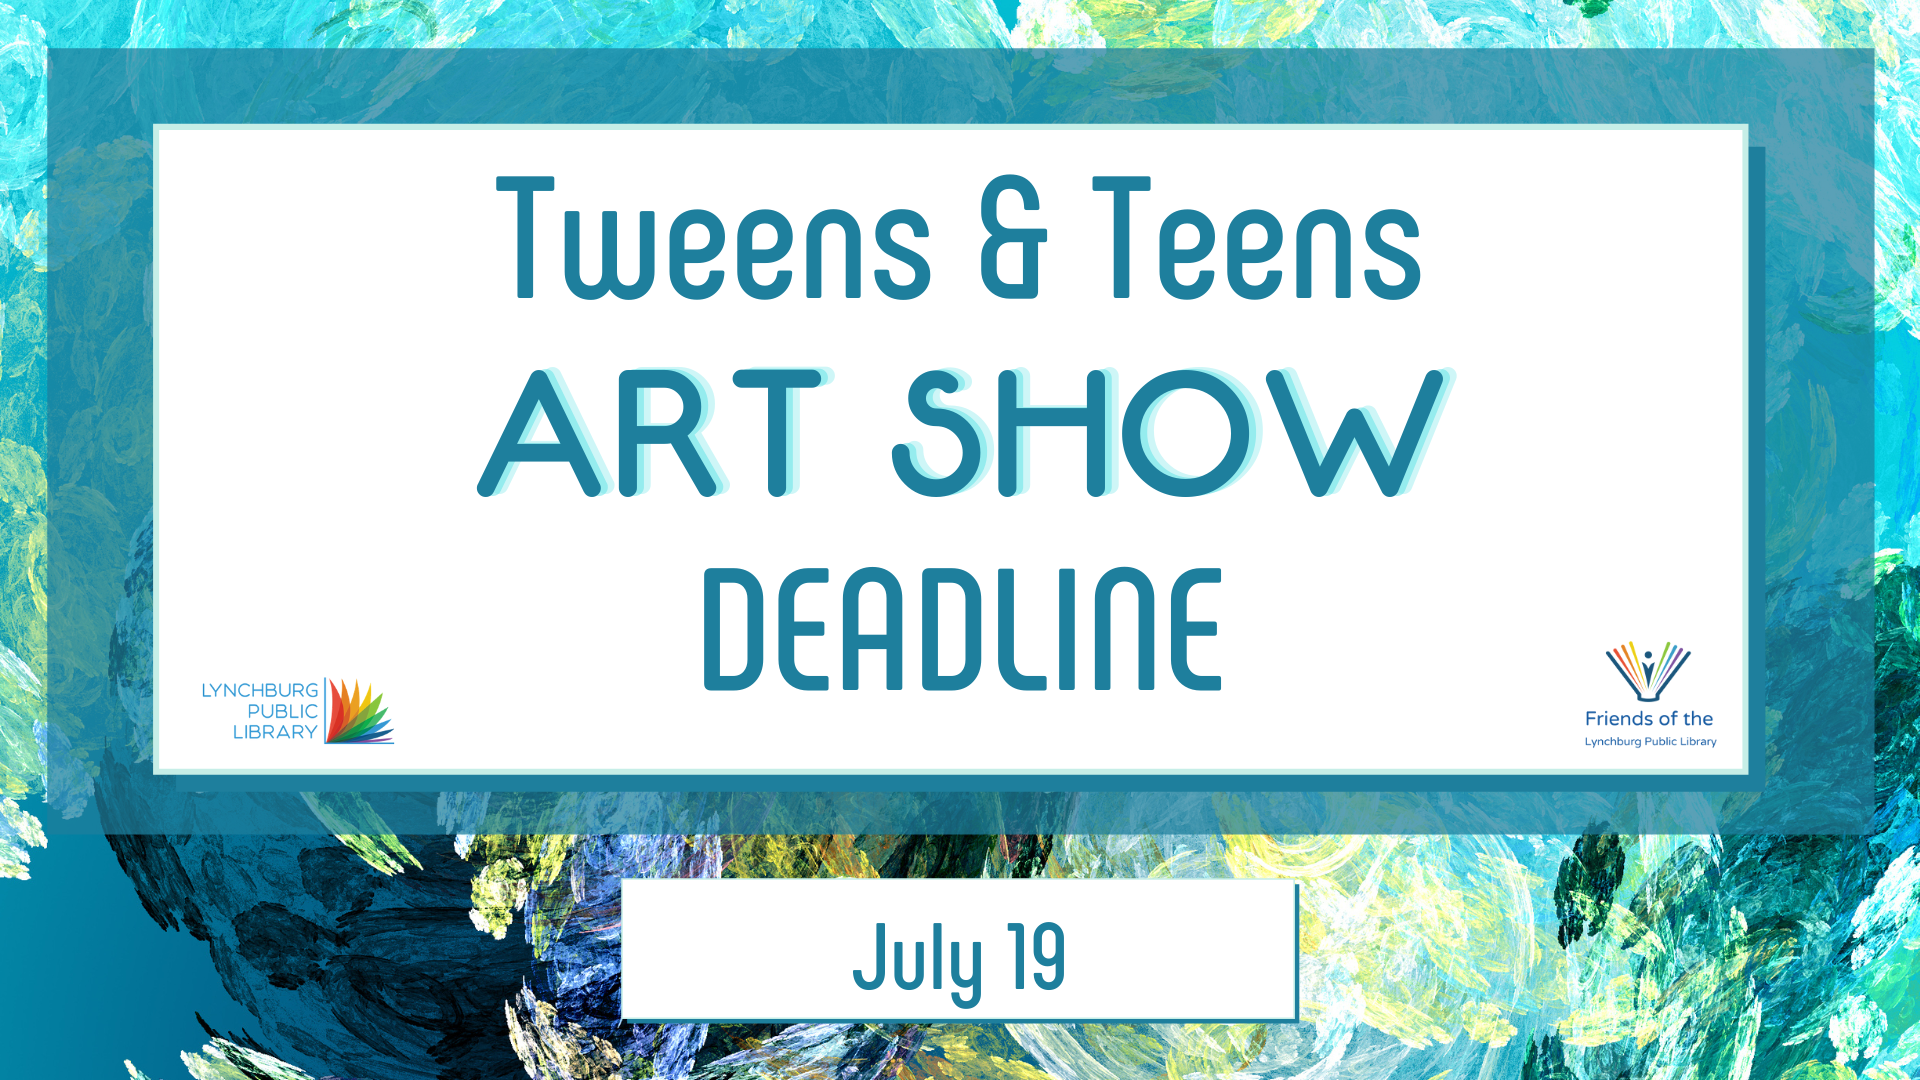 Image features paint splattered background. Text states Tweens & Teens Art Show Deadline July 19